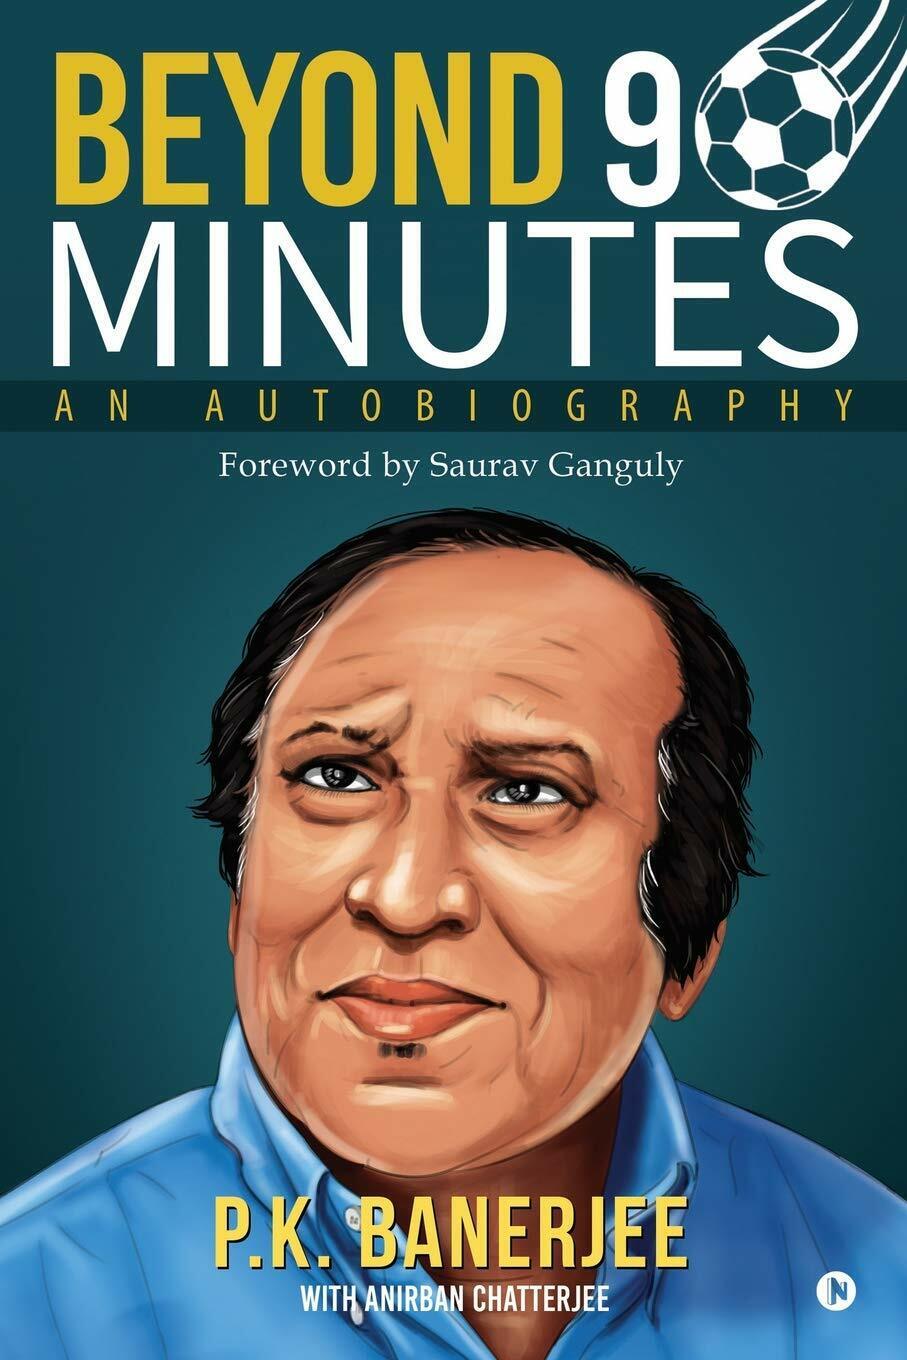 Beyond 90 Minutes: An Autobiography - Anirban Chatterjee, P. K. Banerjee - 2019